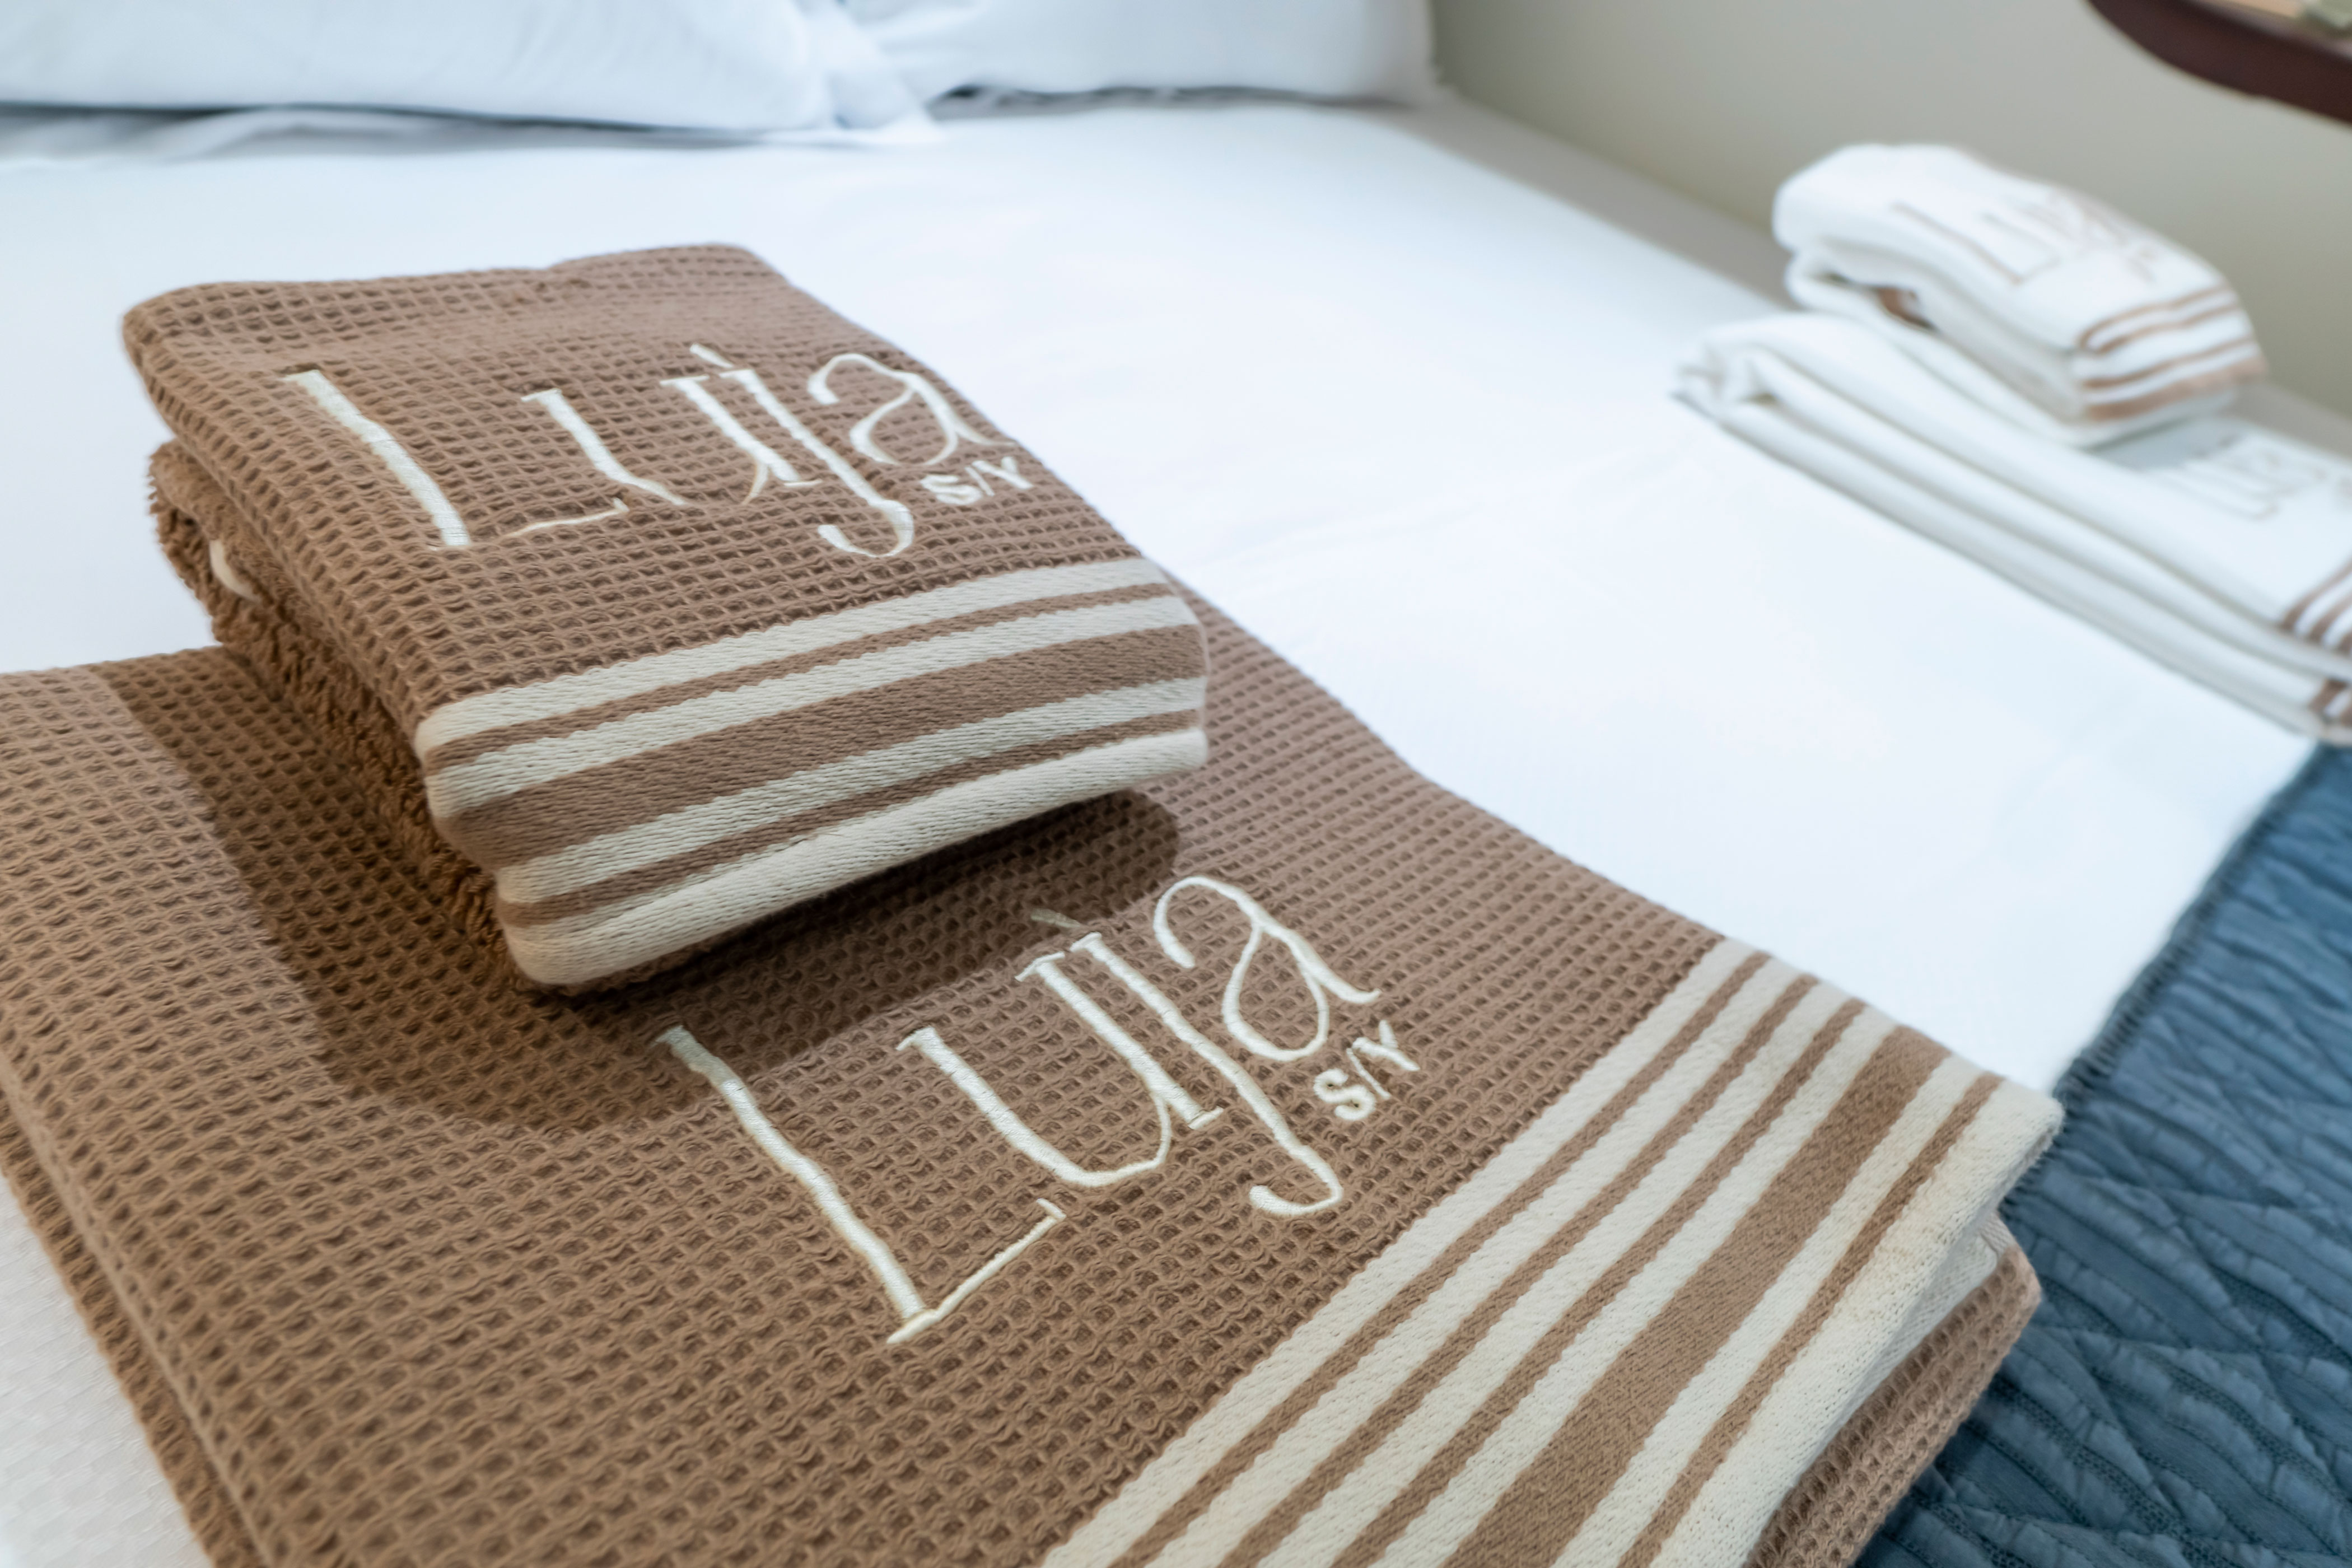 Monogramed Towels